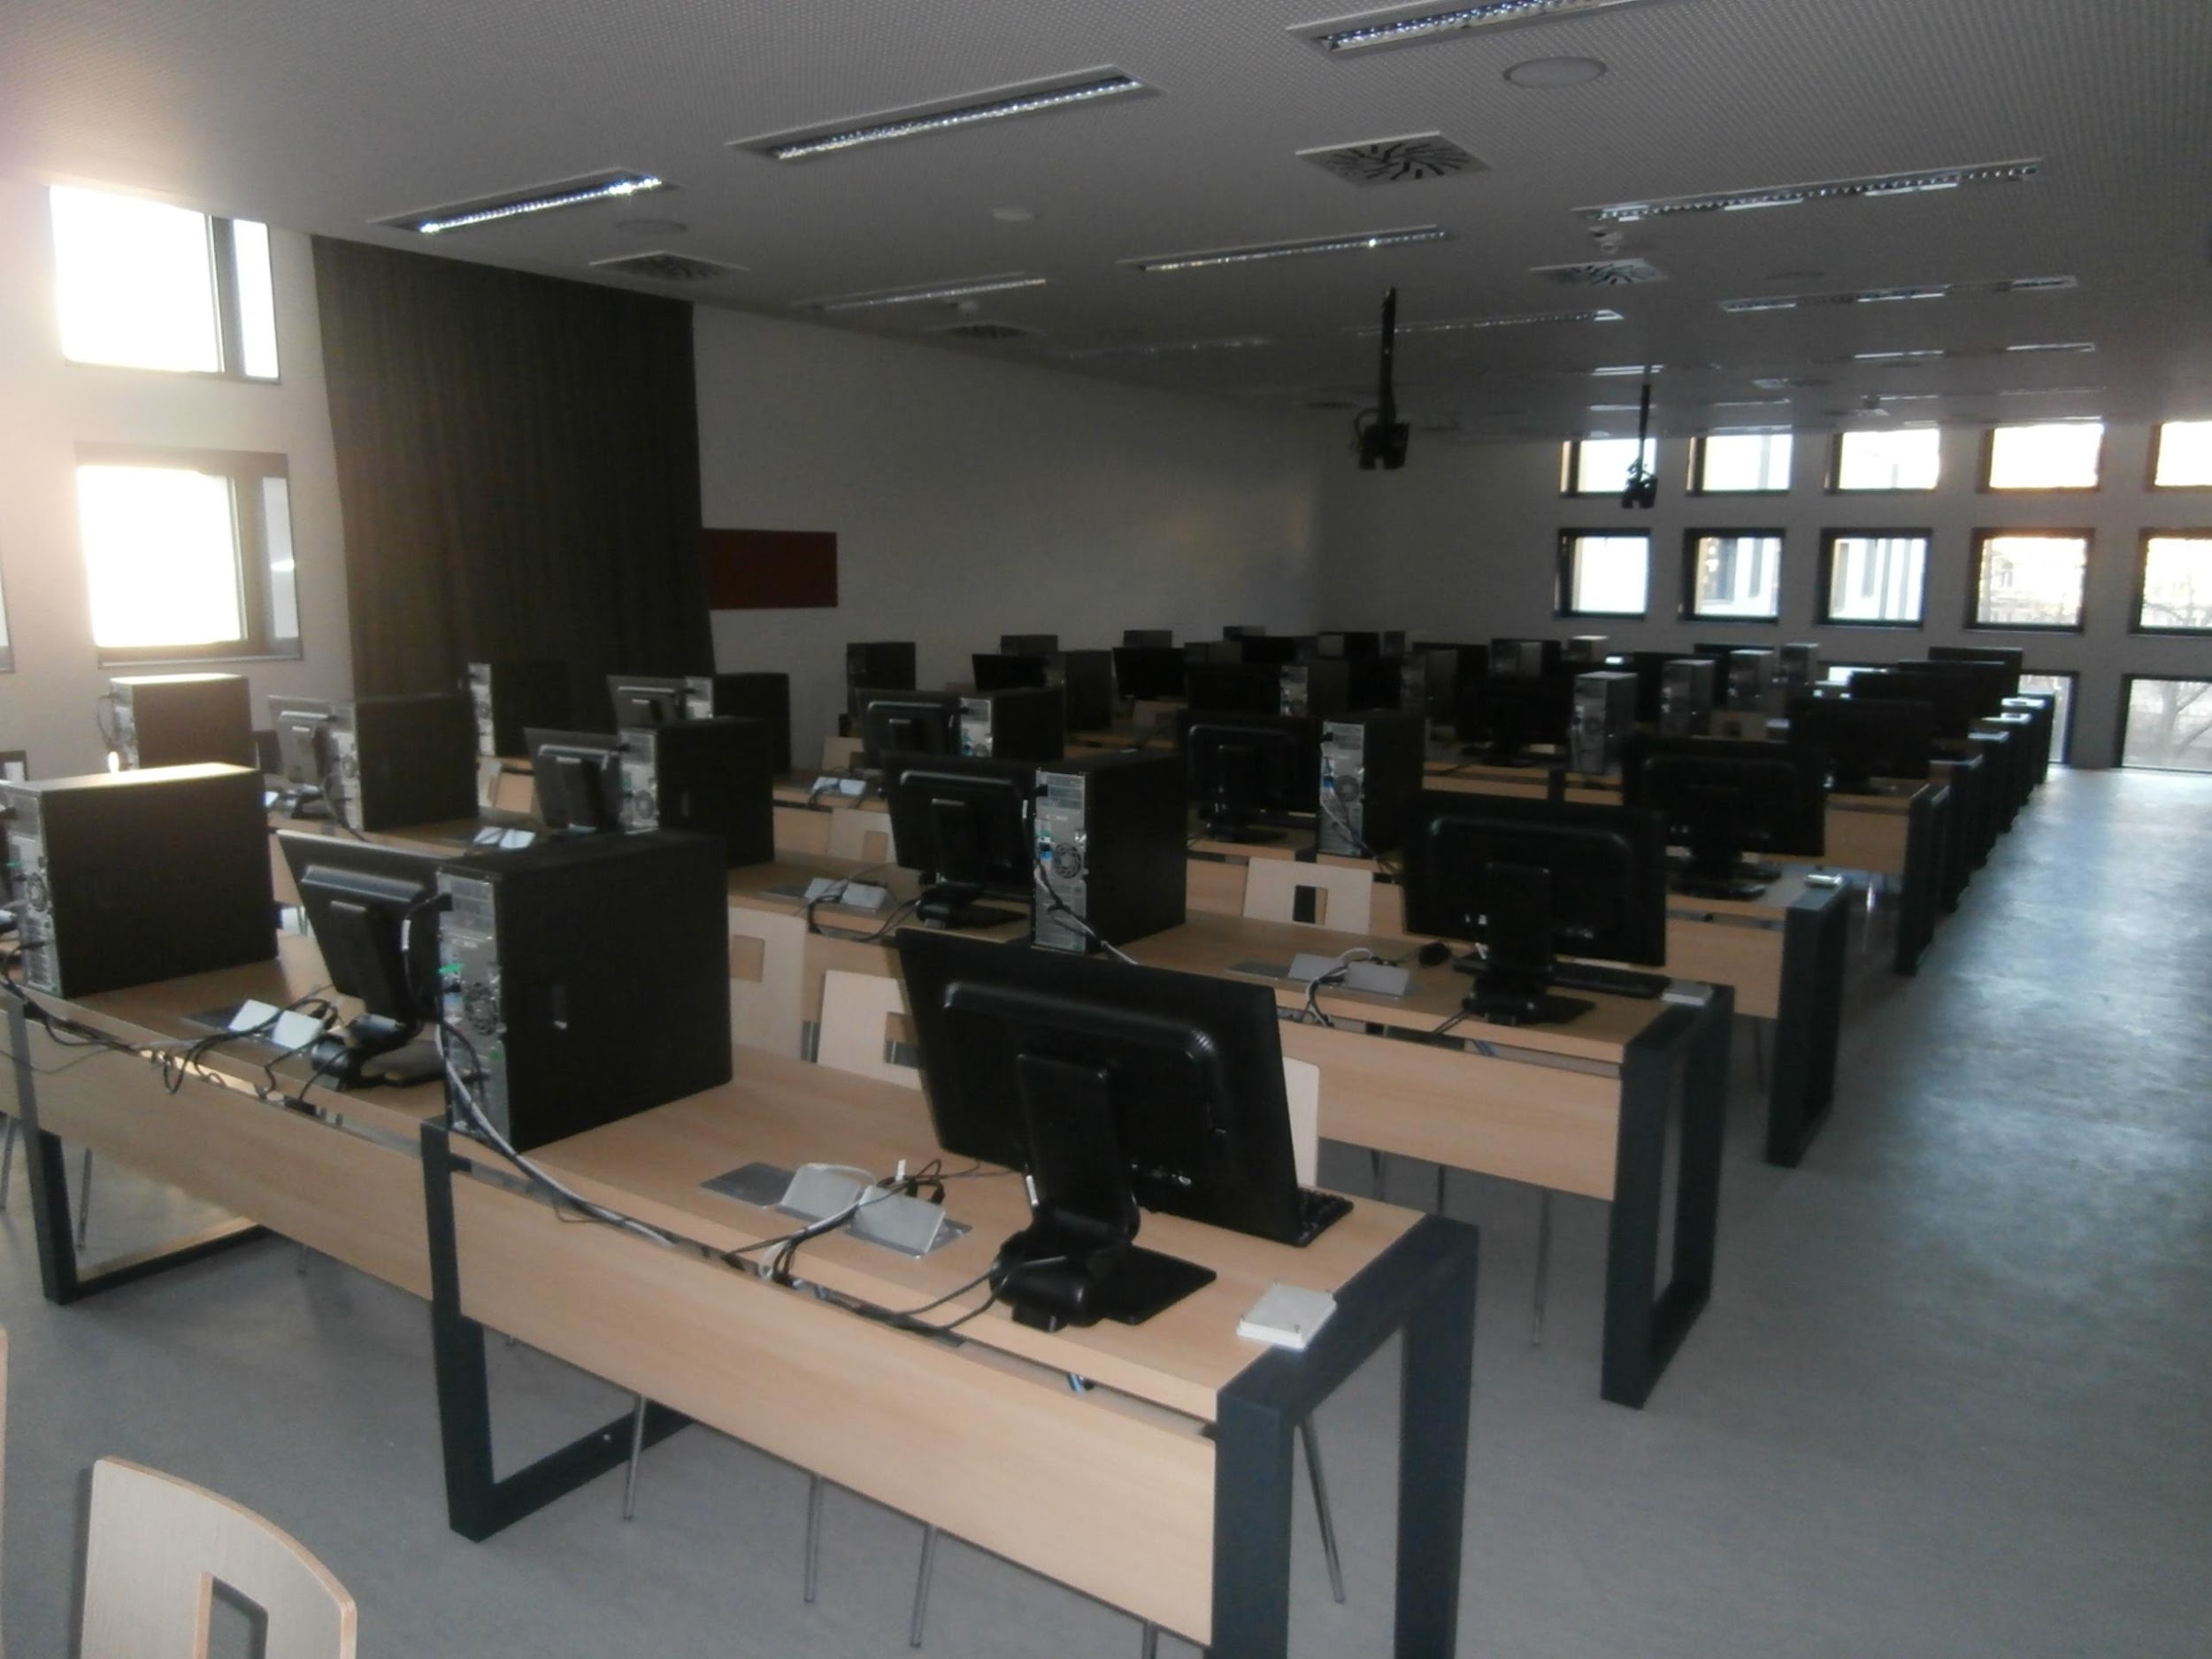 Current computer classroom at Faculty of Education, Palacký University Olomouc, Czechia